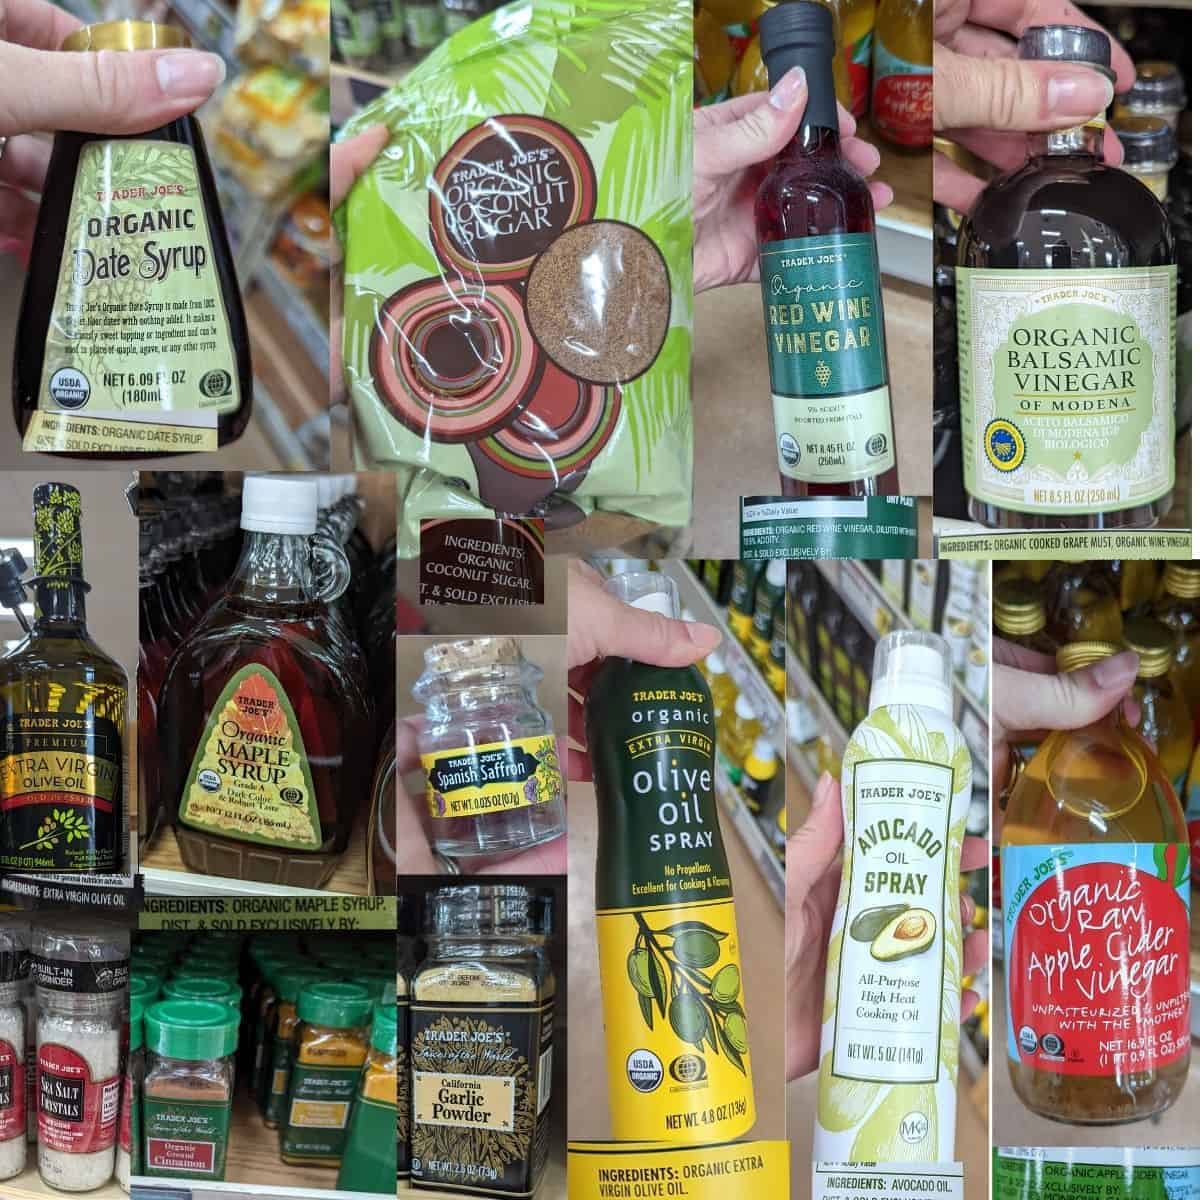 Trader Joes Date syrup, coconut sugar, wine vinegar, balsamic vinegar, olive oil spray, avocado oil spray with ingredient labels.